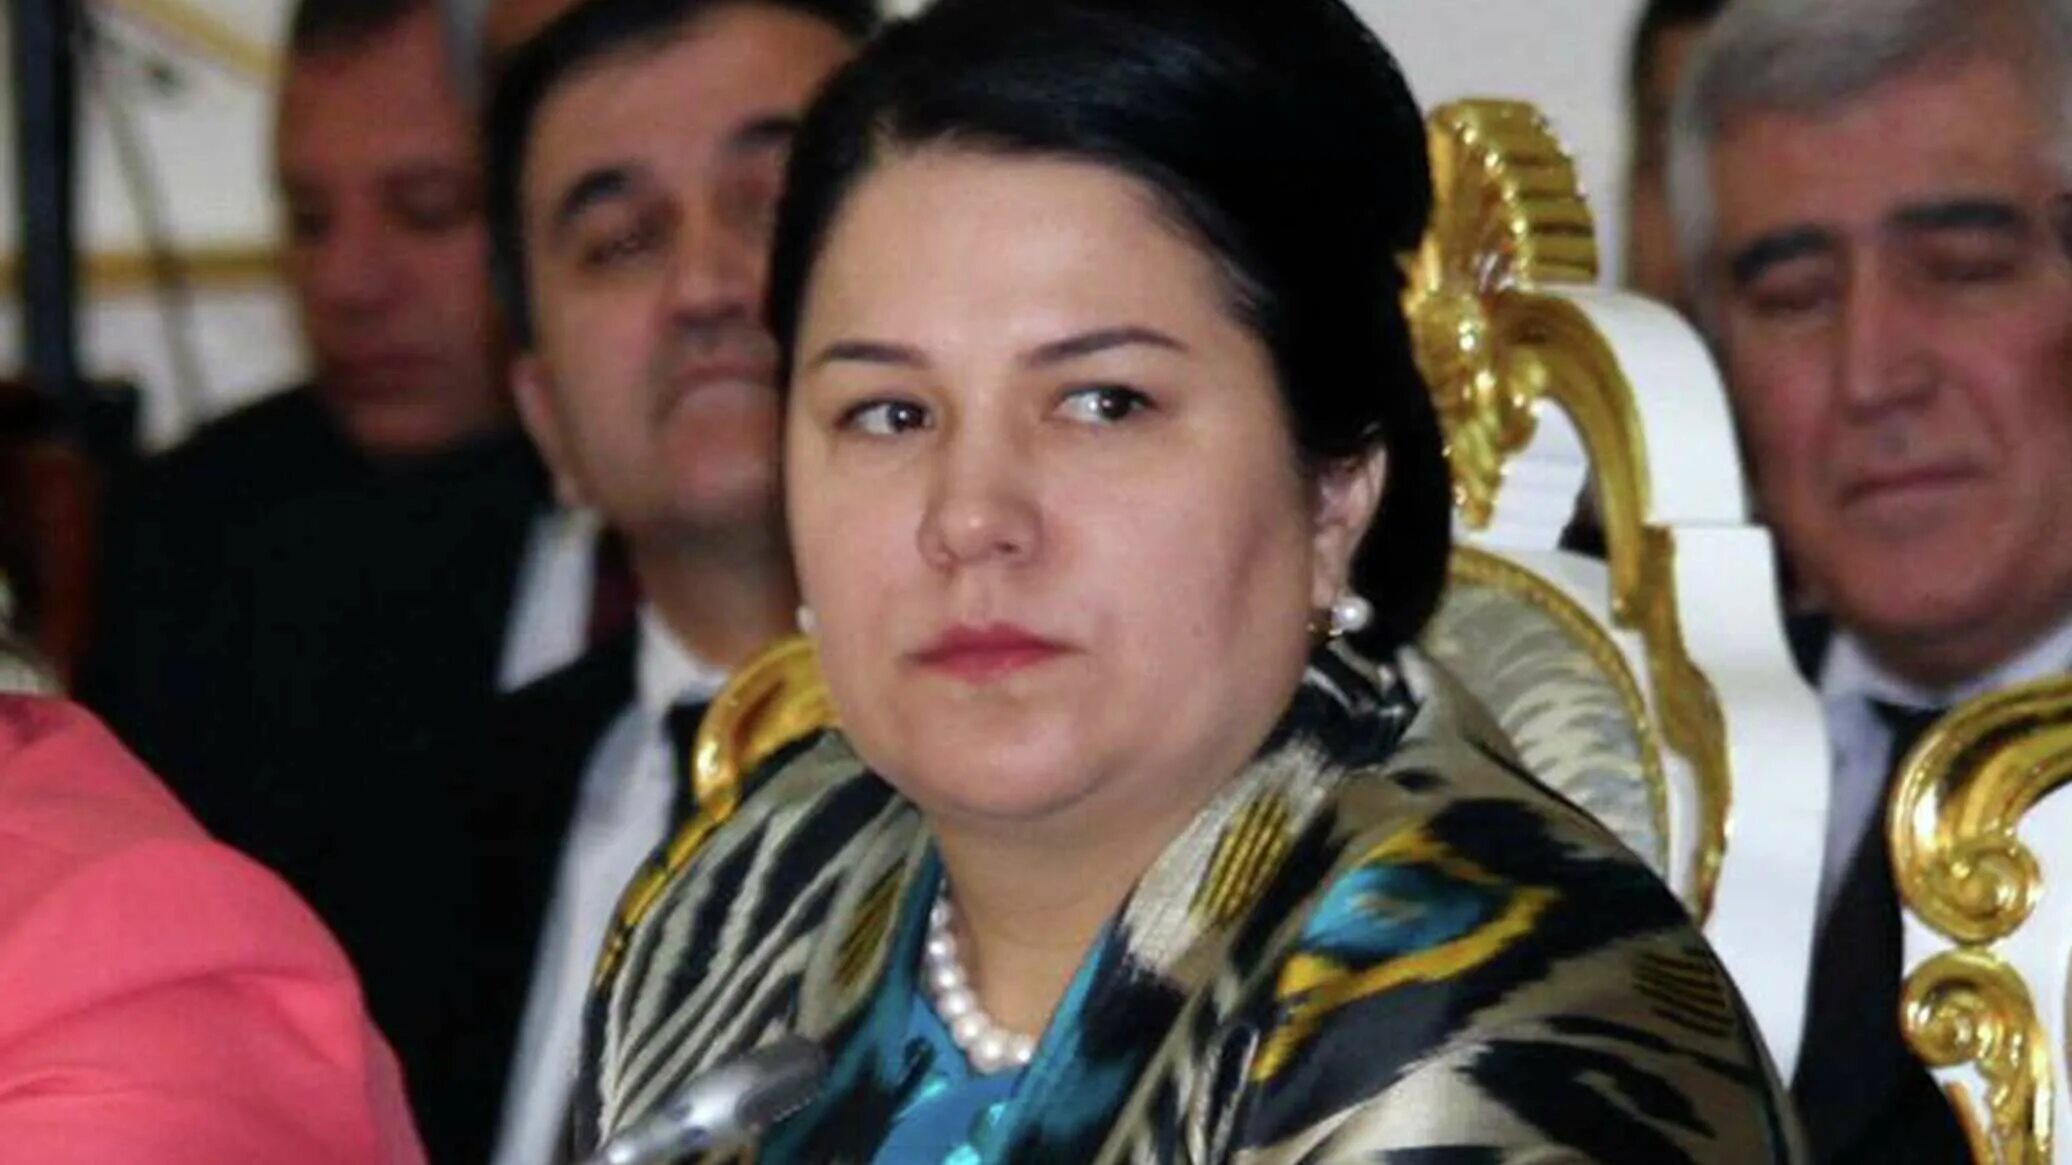 Дочь президента Эмомали Рахмон. Тахмина Рахмонова дочь президента Таджикистана. Жена президента Таджикистана Эмомали Рахмон. Год рождения эмомали рахмон